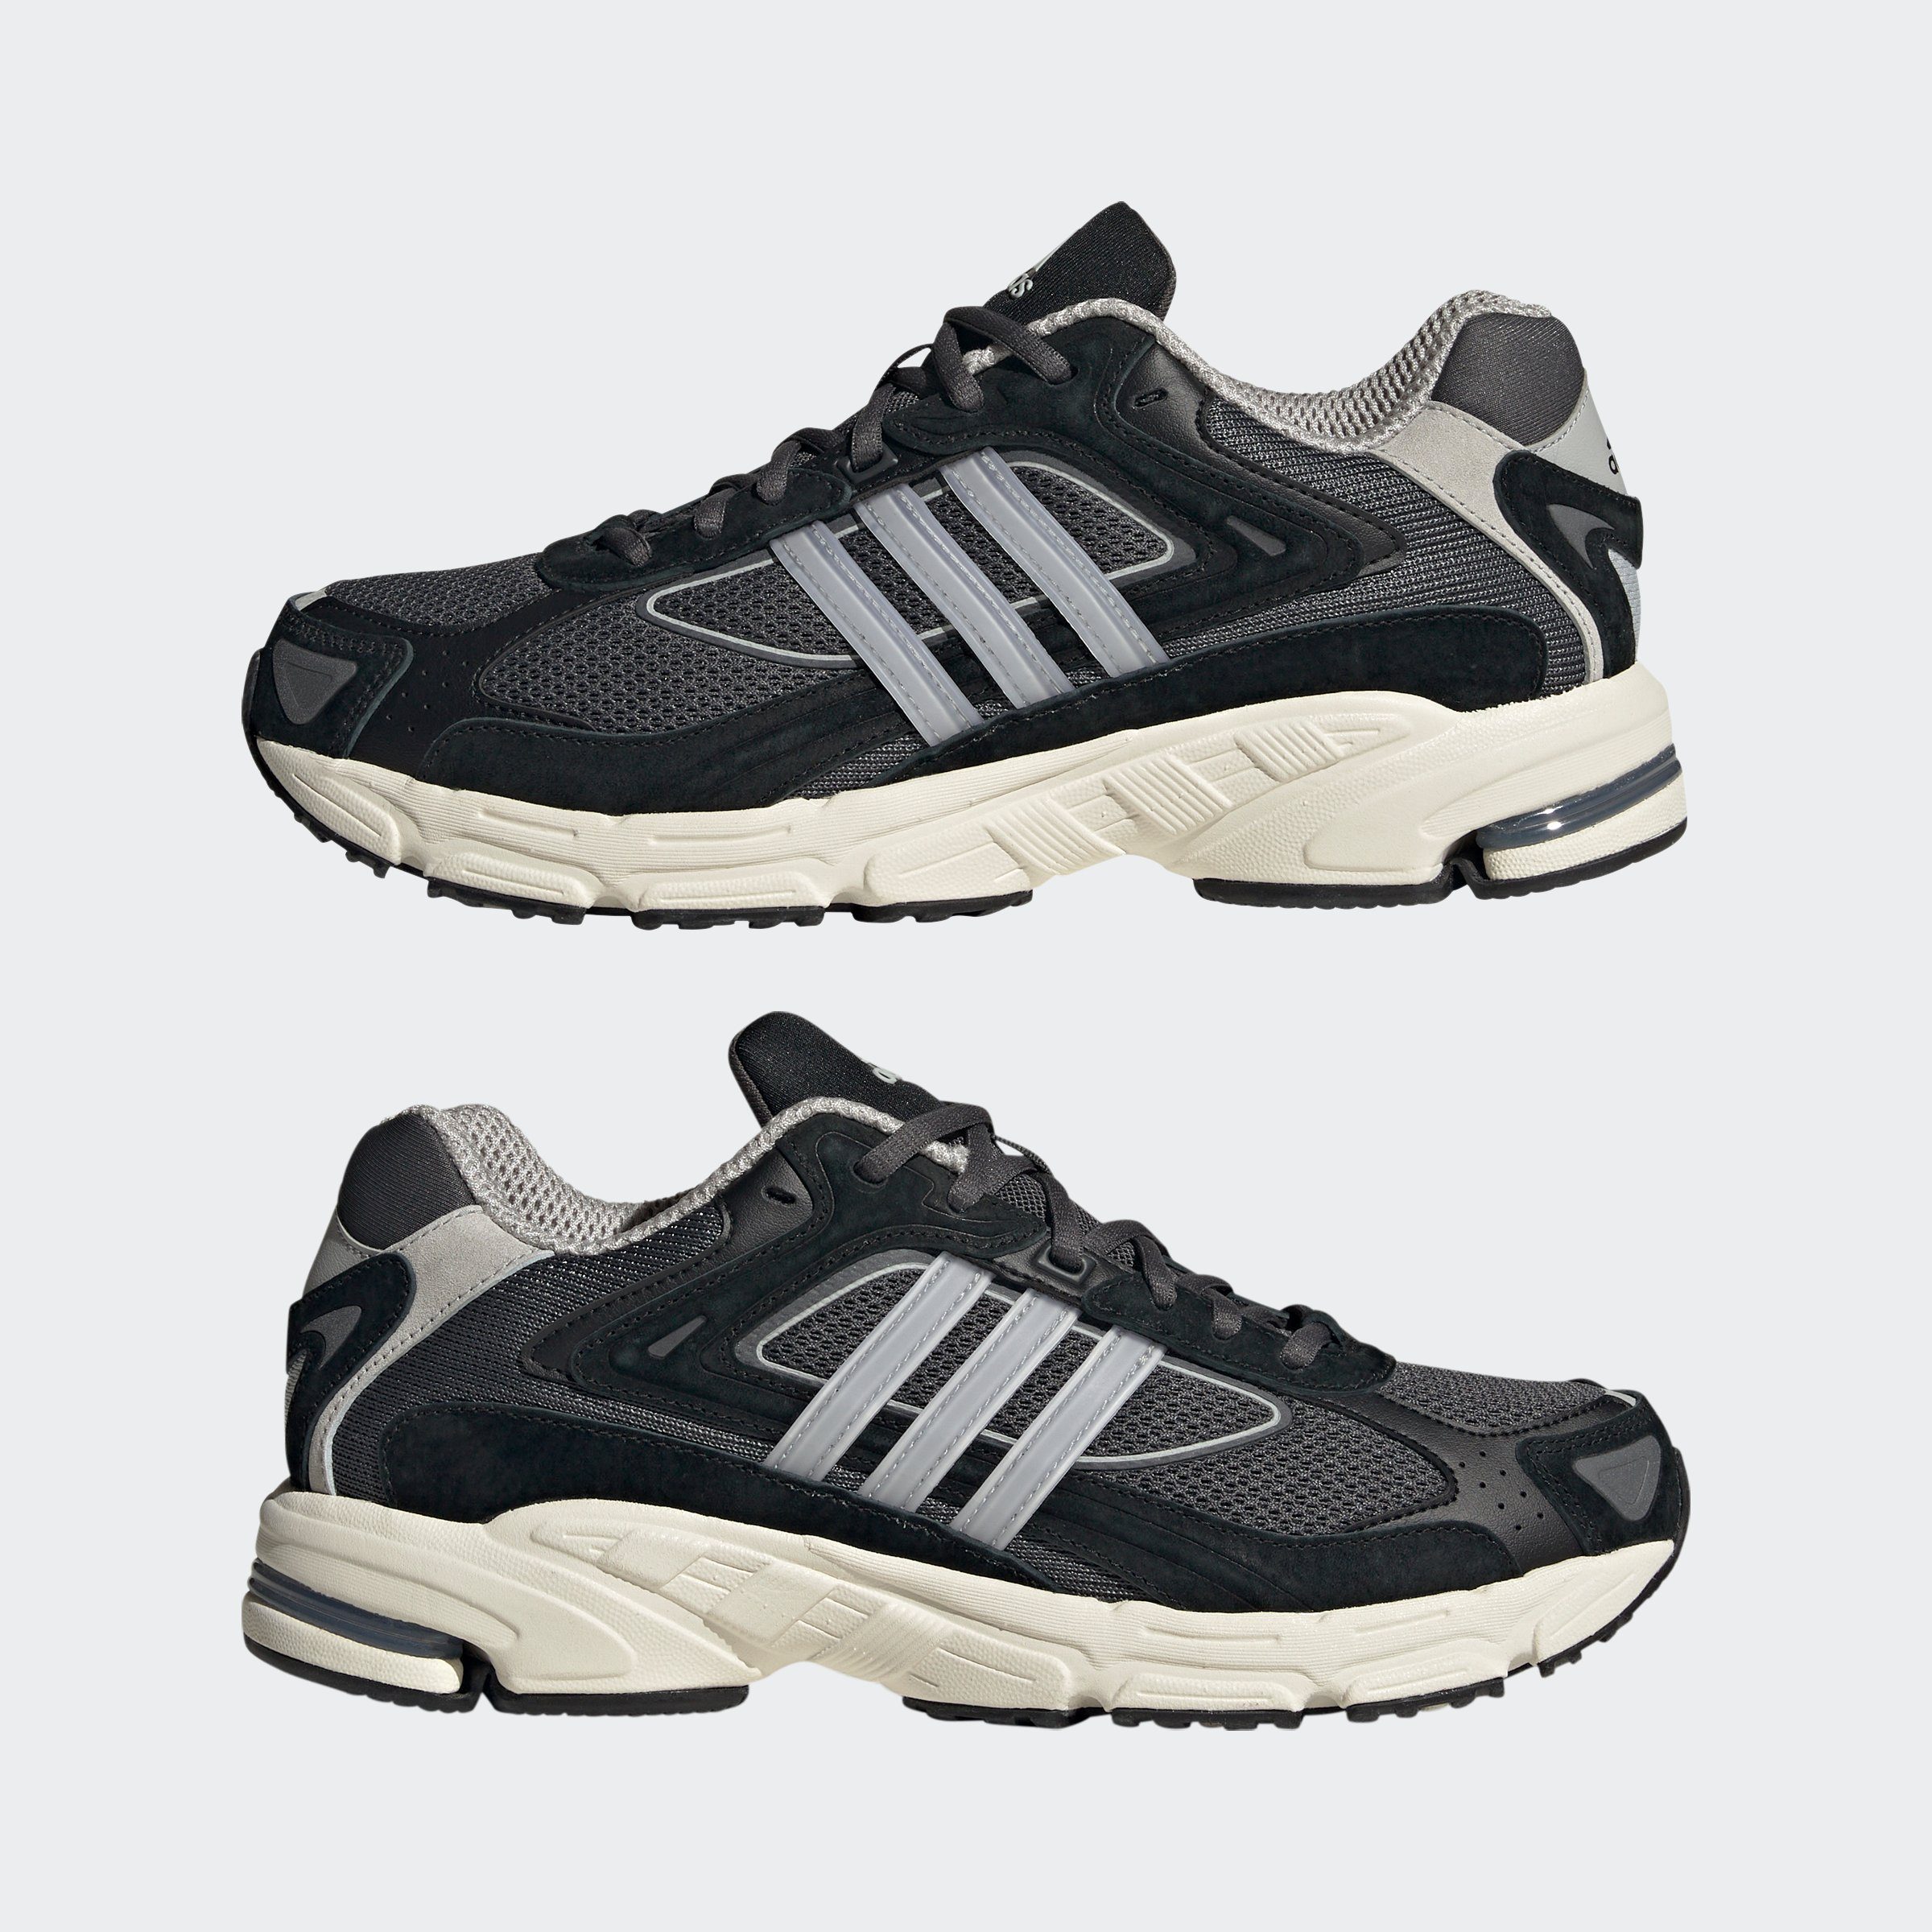 Six / Sneaker Core CL Originals Grey adidas Grey RESPONSE Black / Two